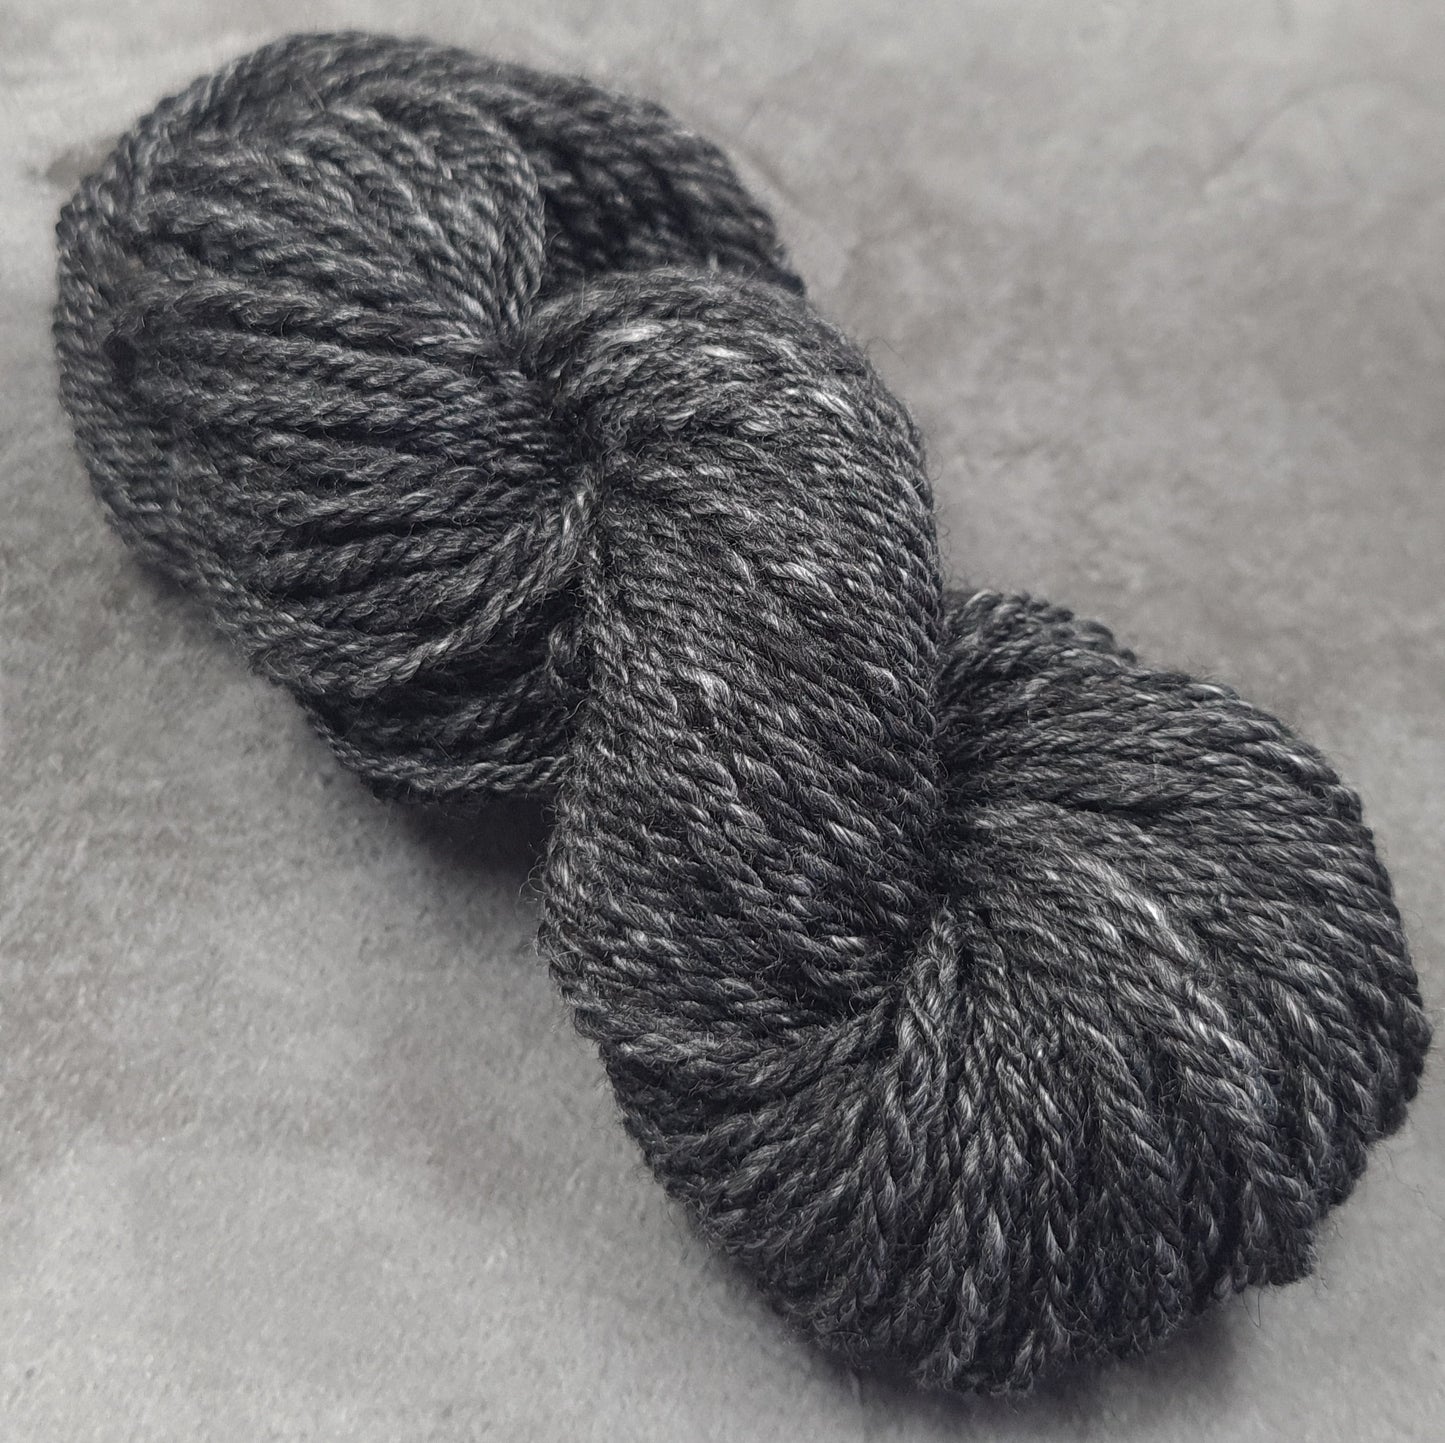 Handspun Worsted/Aran yarn, alpaca, merino wool & silk, mini skeins